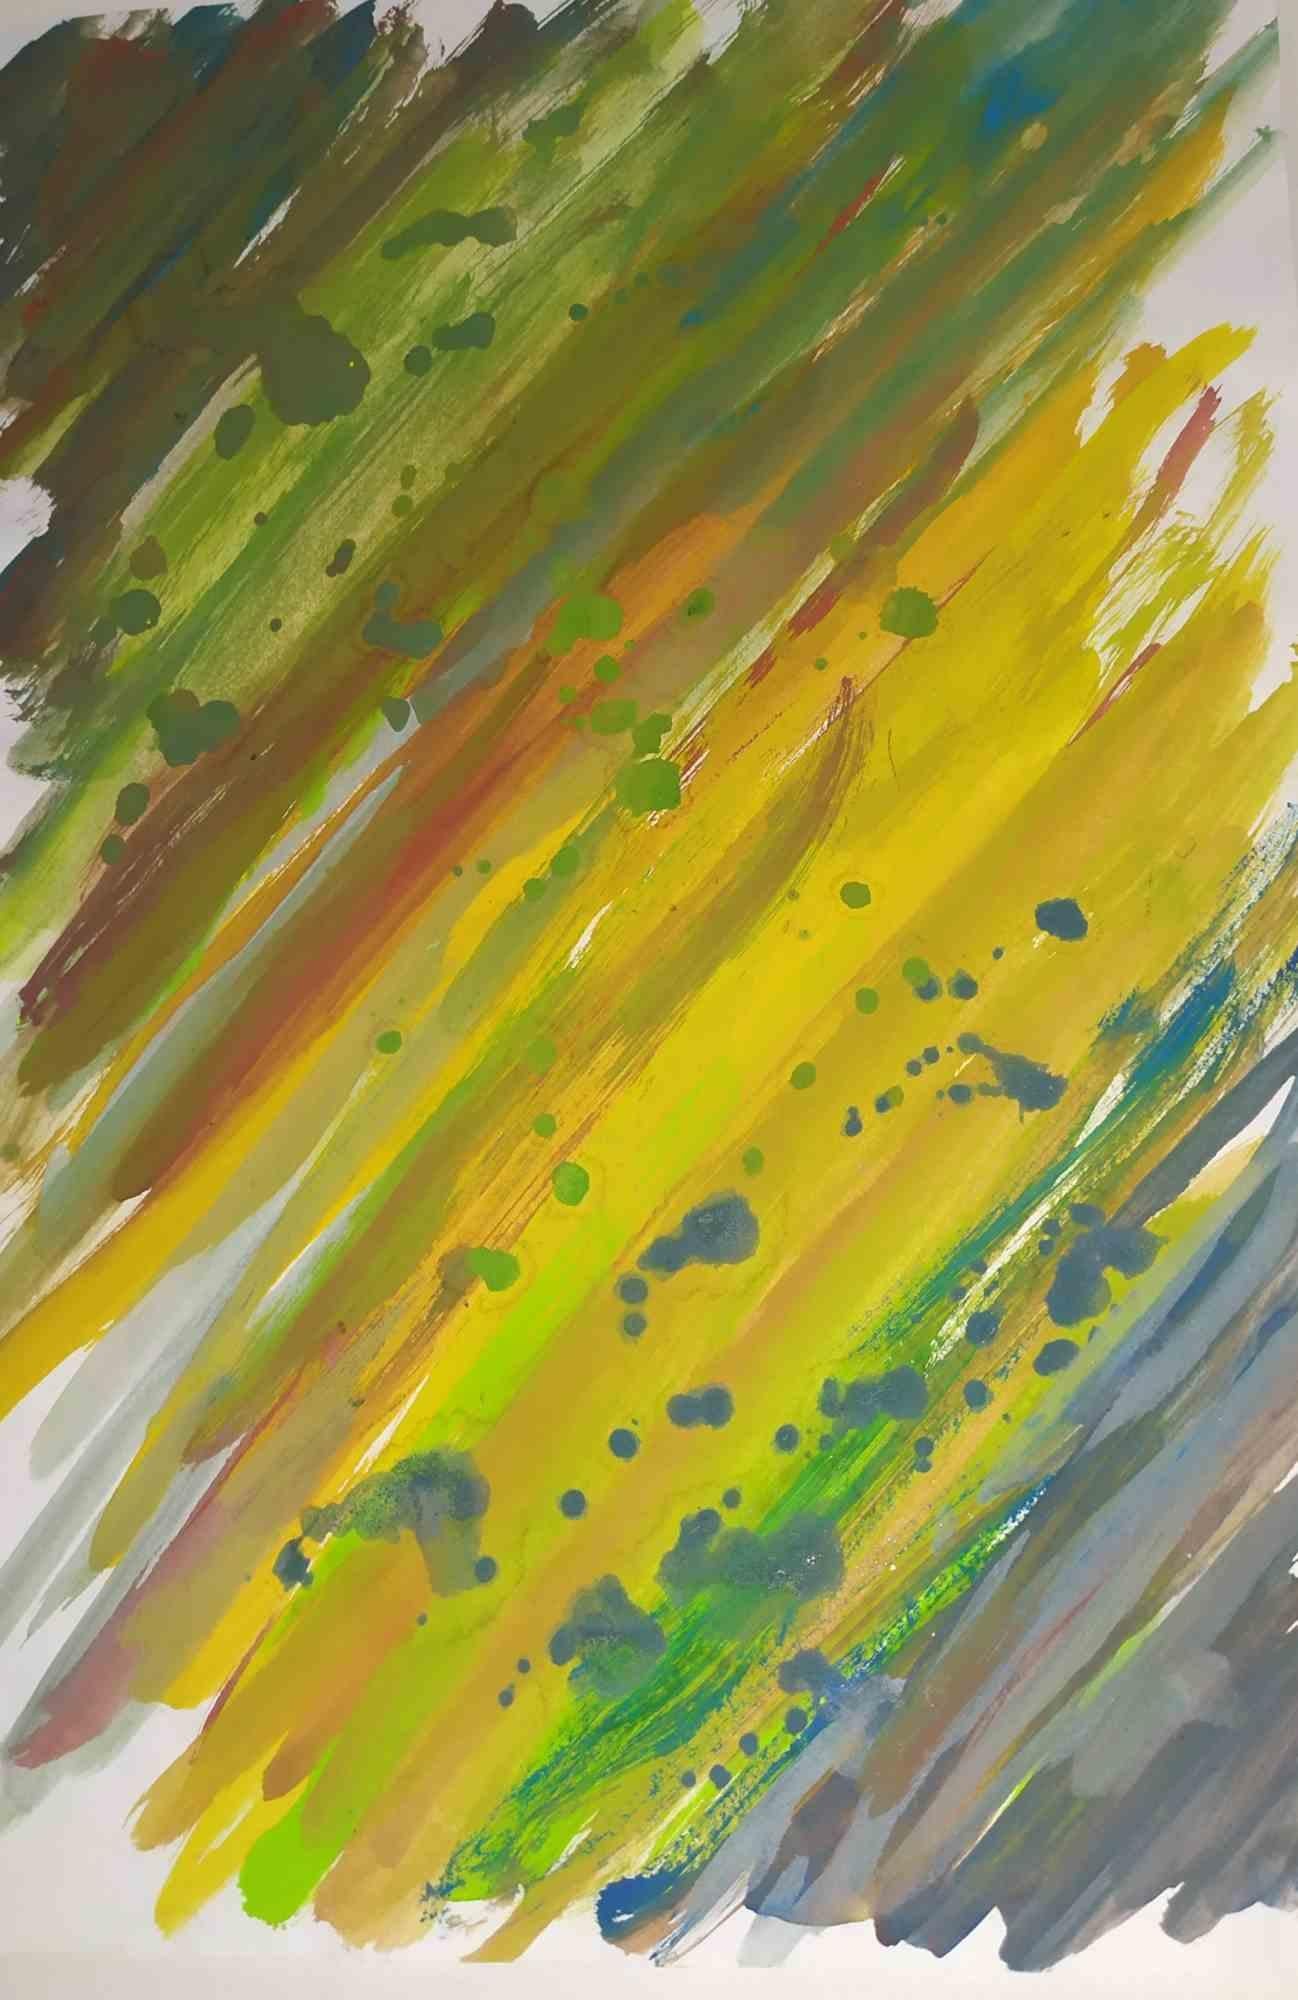 Abstract Painting Contempologyc E.M. - Mixture - Tempera sur papier - 2021